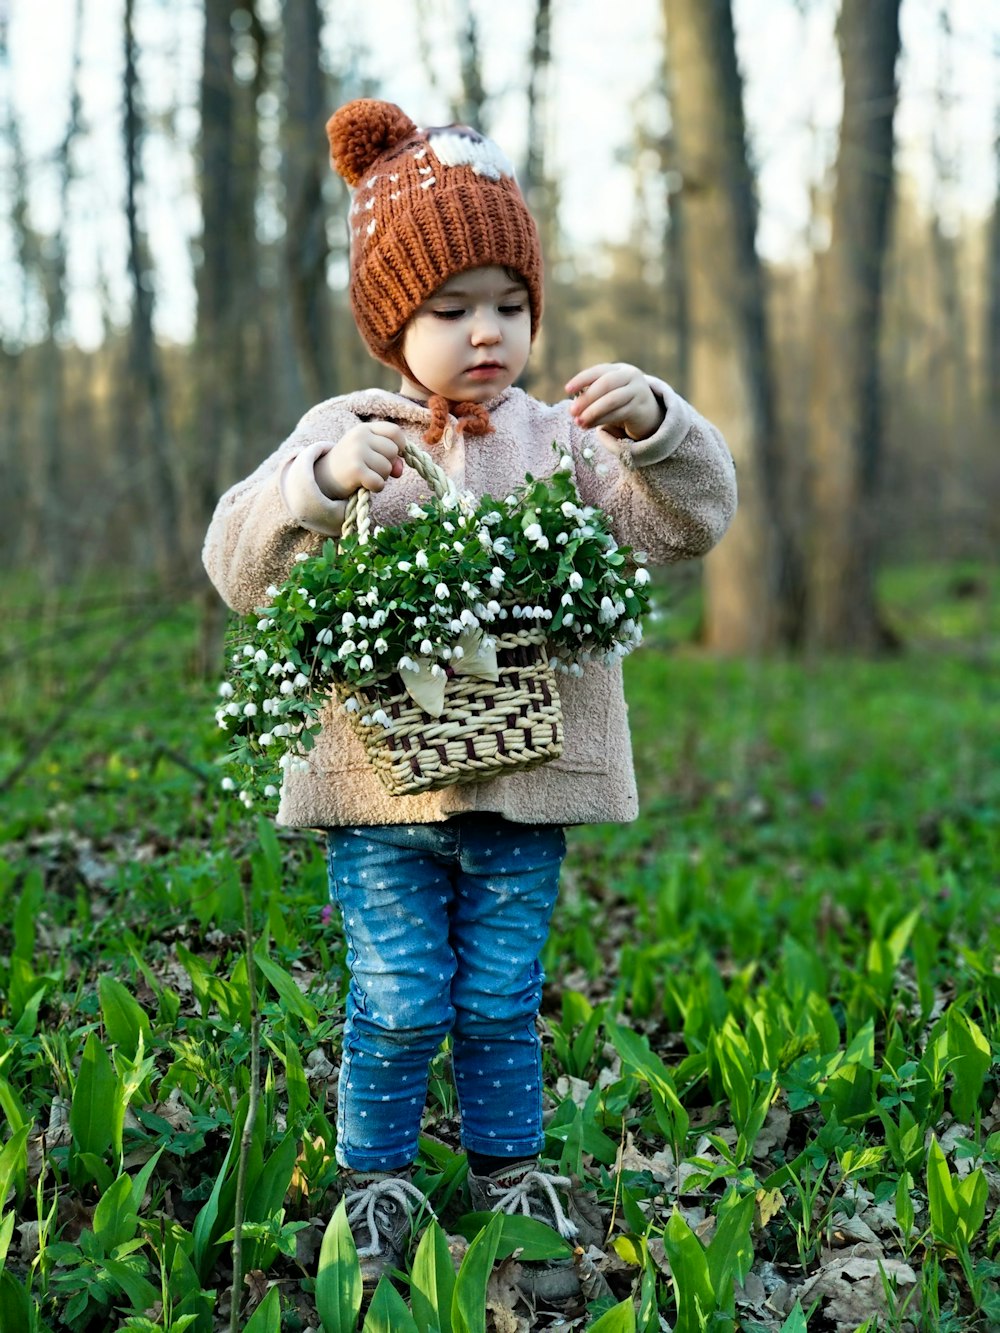 Flower Child Pictures | Download Free Images on Unsplash